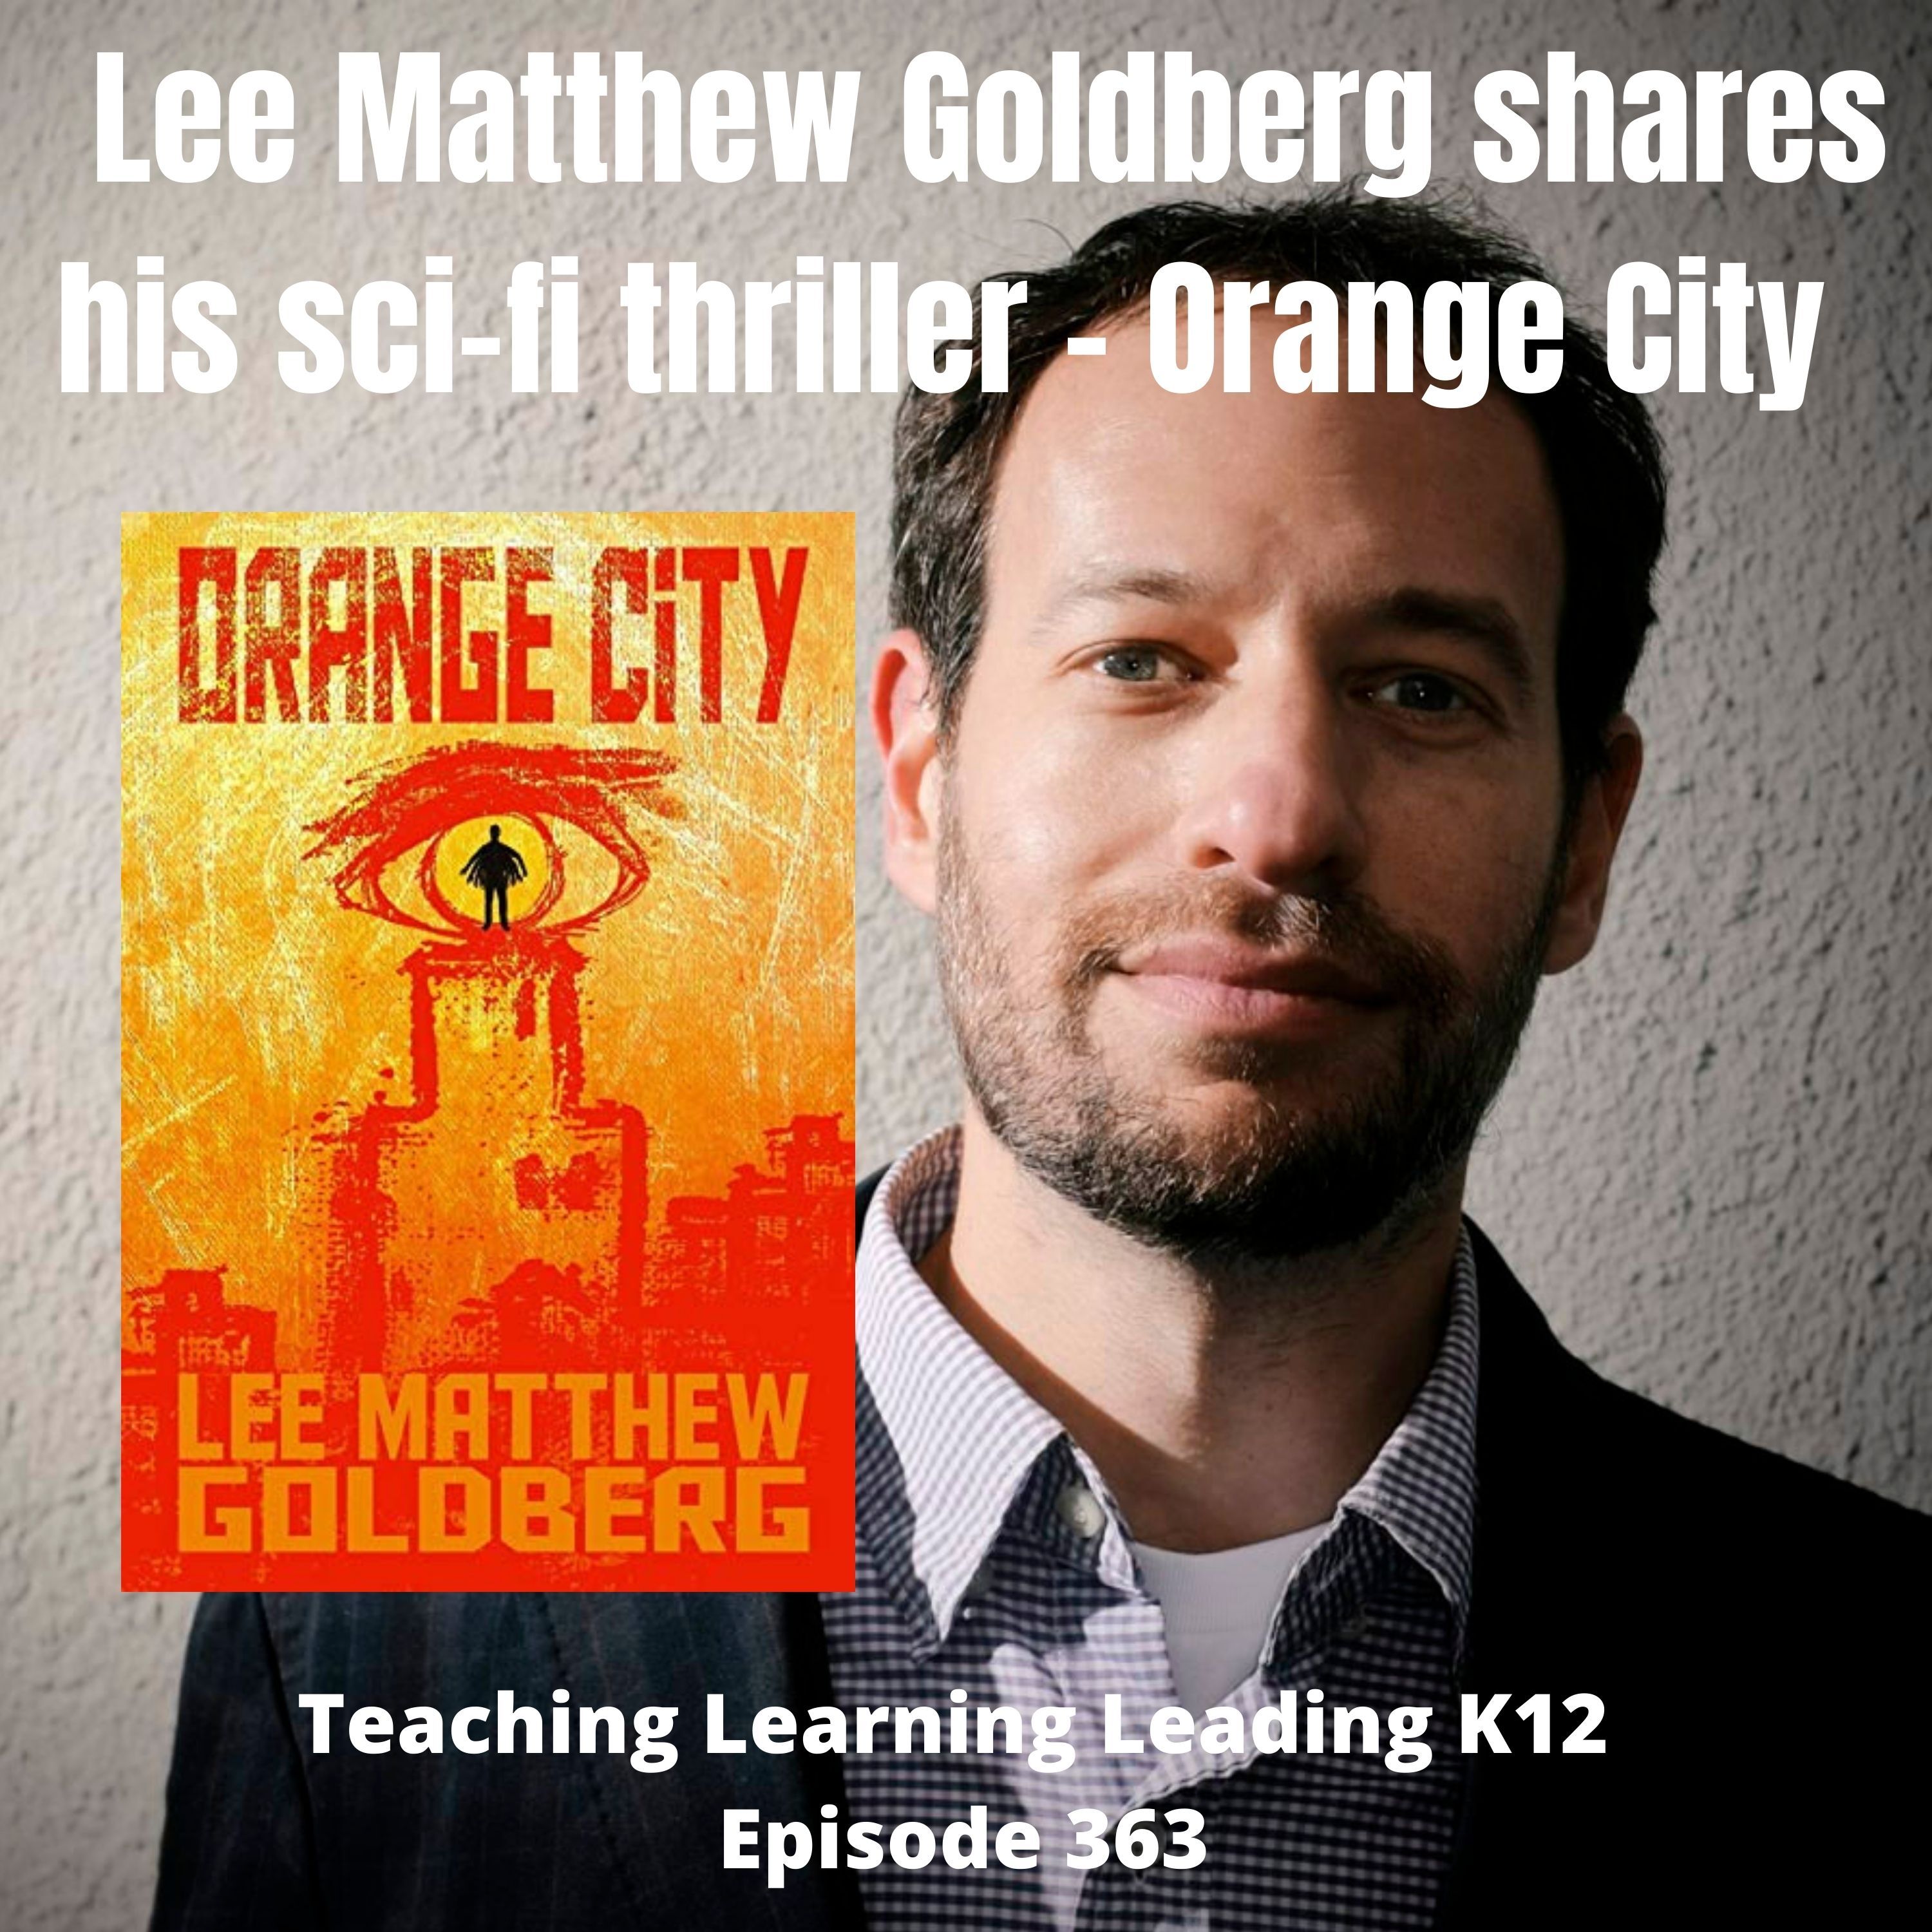 Lee Matthew Goldberg Shares His Sci-Fi Thriller - Orange City - 363